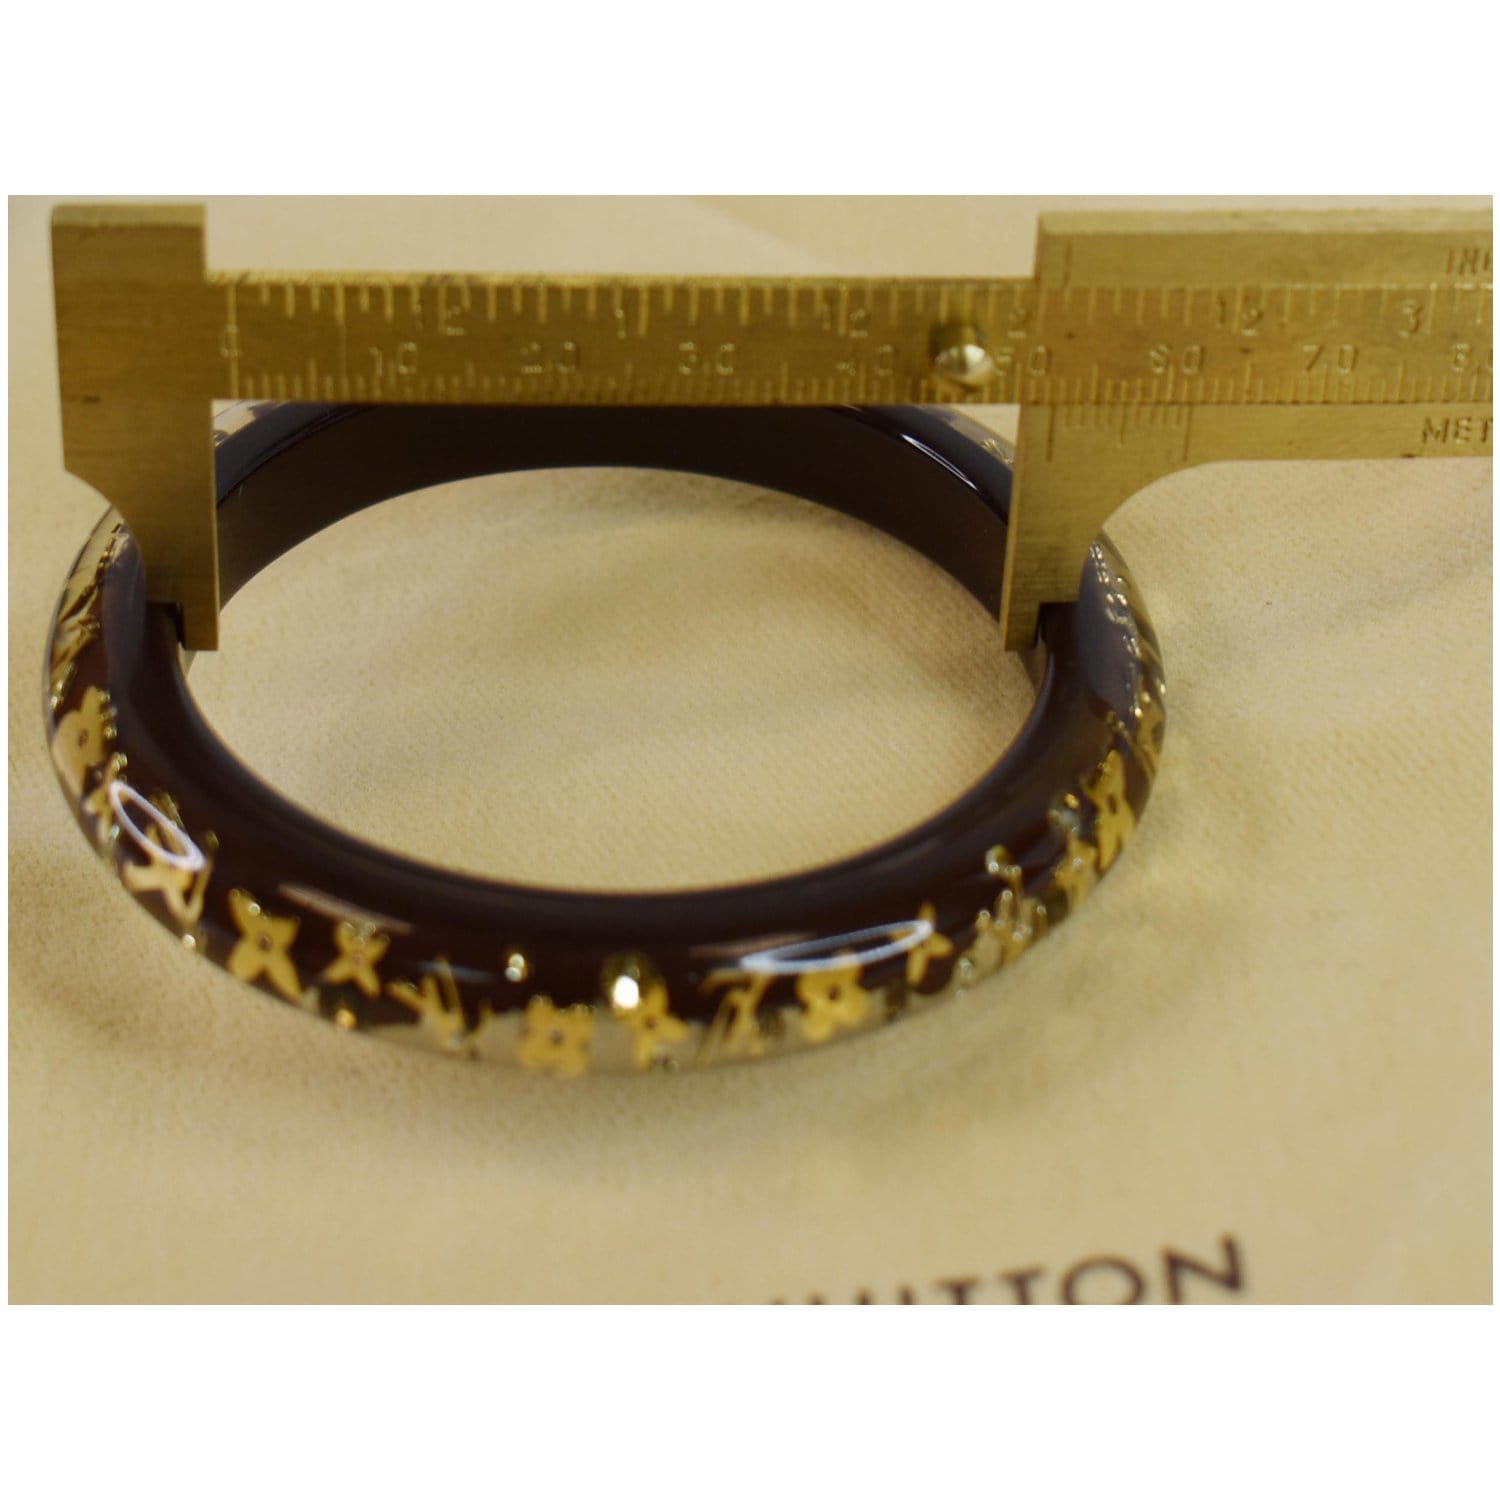 Louis Vuitton - Authenticated Inclusion Bracelet - Plastic Brown for Women, Very Good Condition